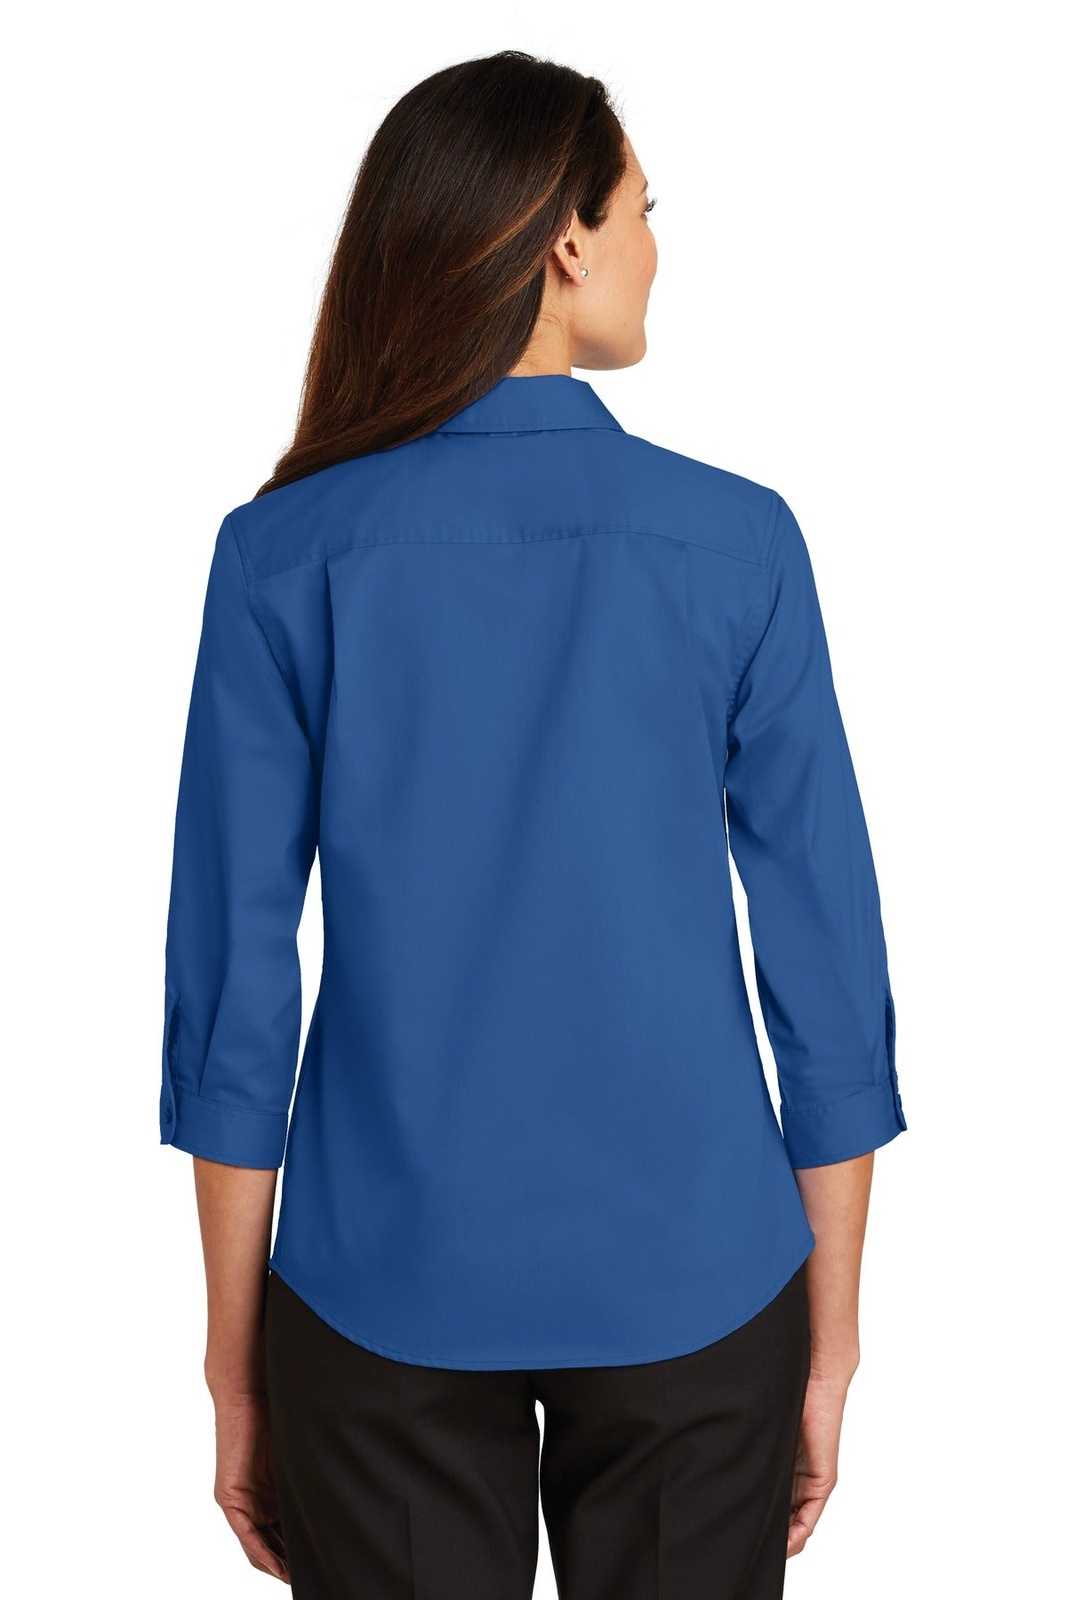 Port Authority L665 Ladies 3/4-Sleeve Superpro Twill Shirt - True Blue - HIT a Double - 1